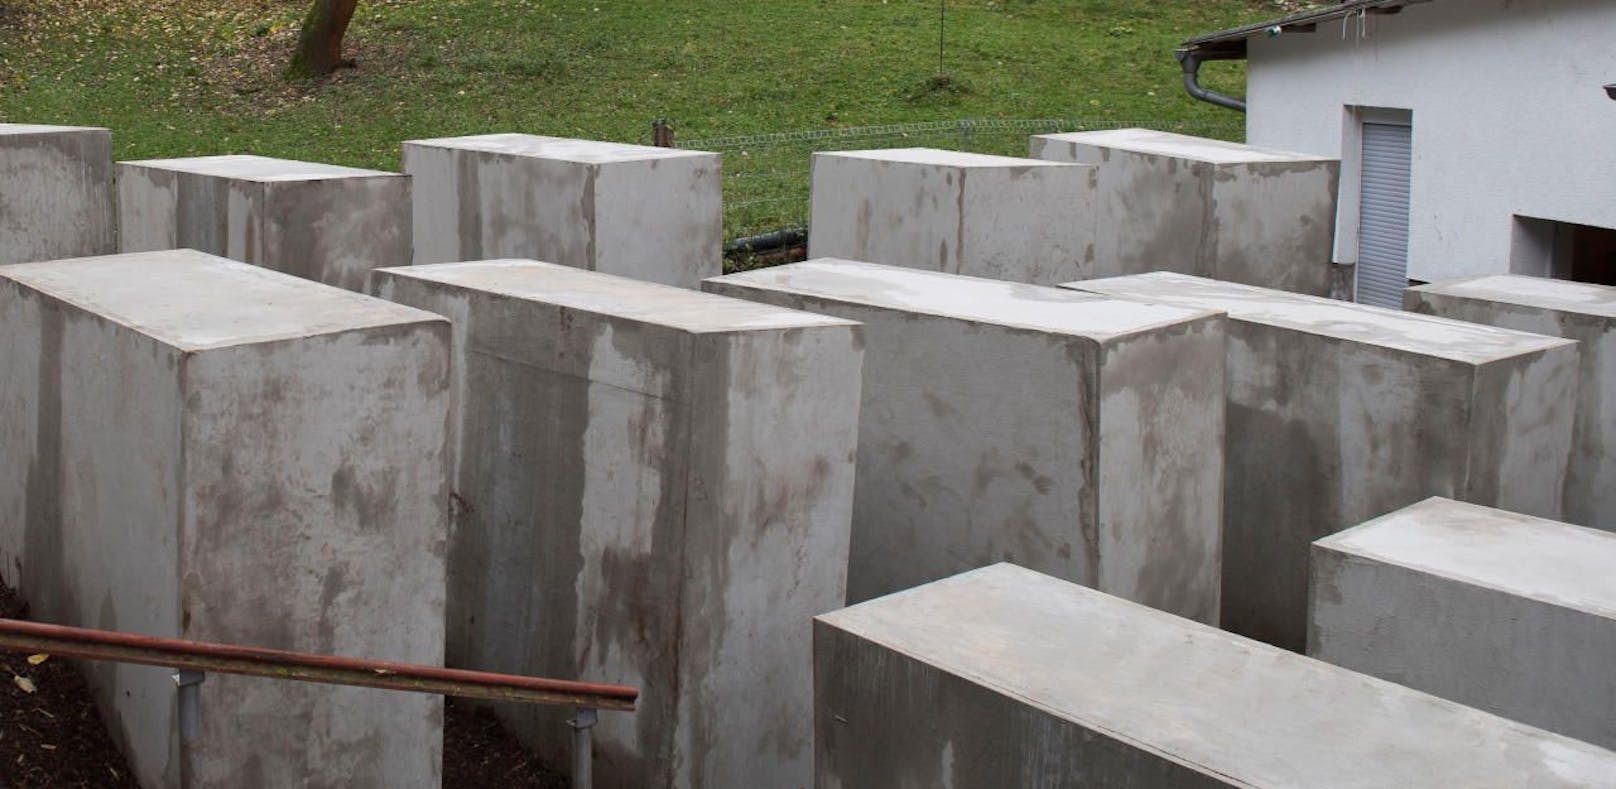 AfD-Politiker lebt plötzlich neben Holocaust-Denkmal